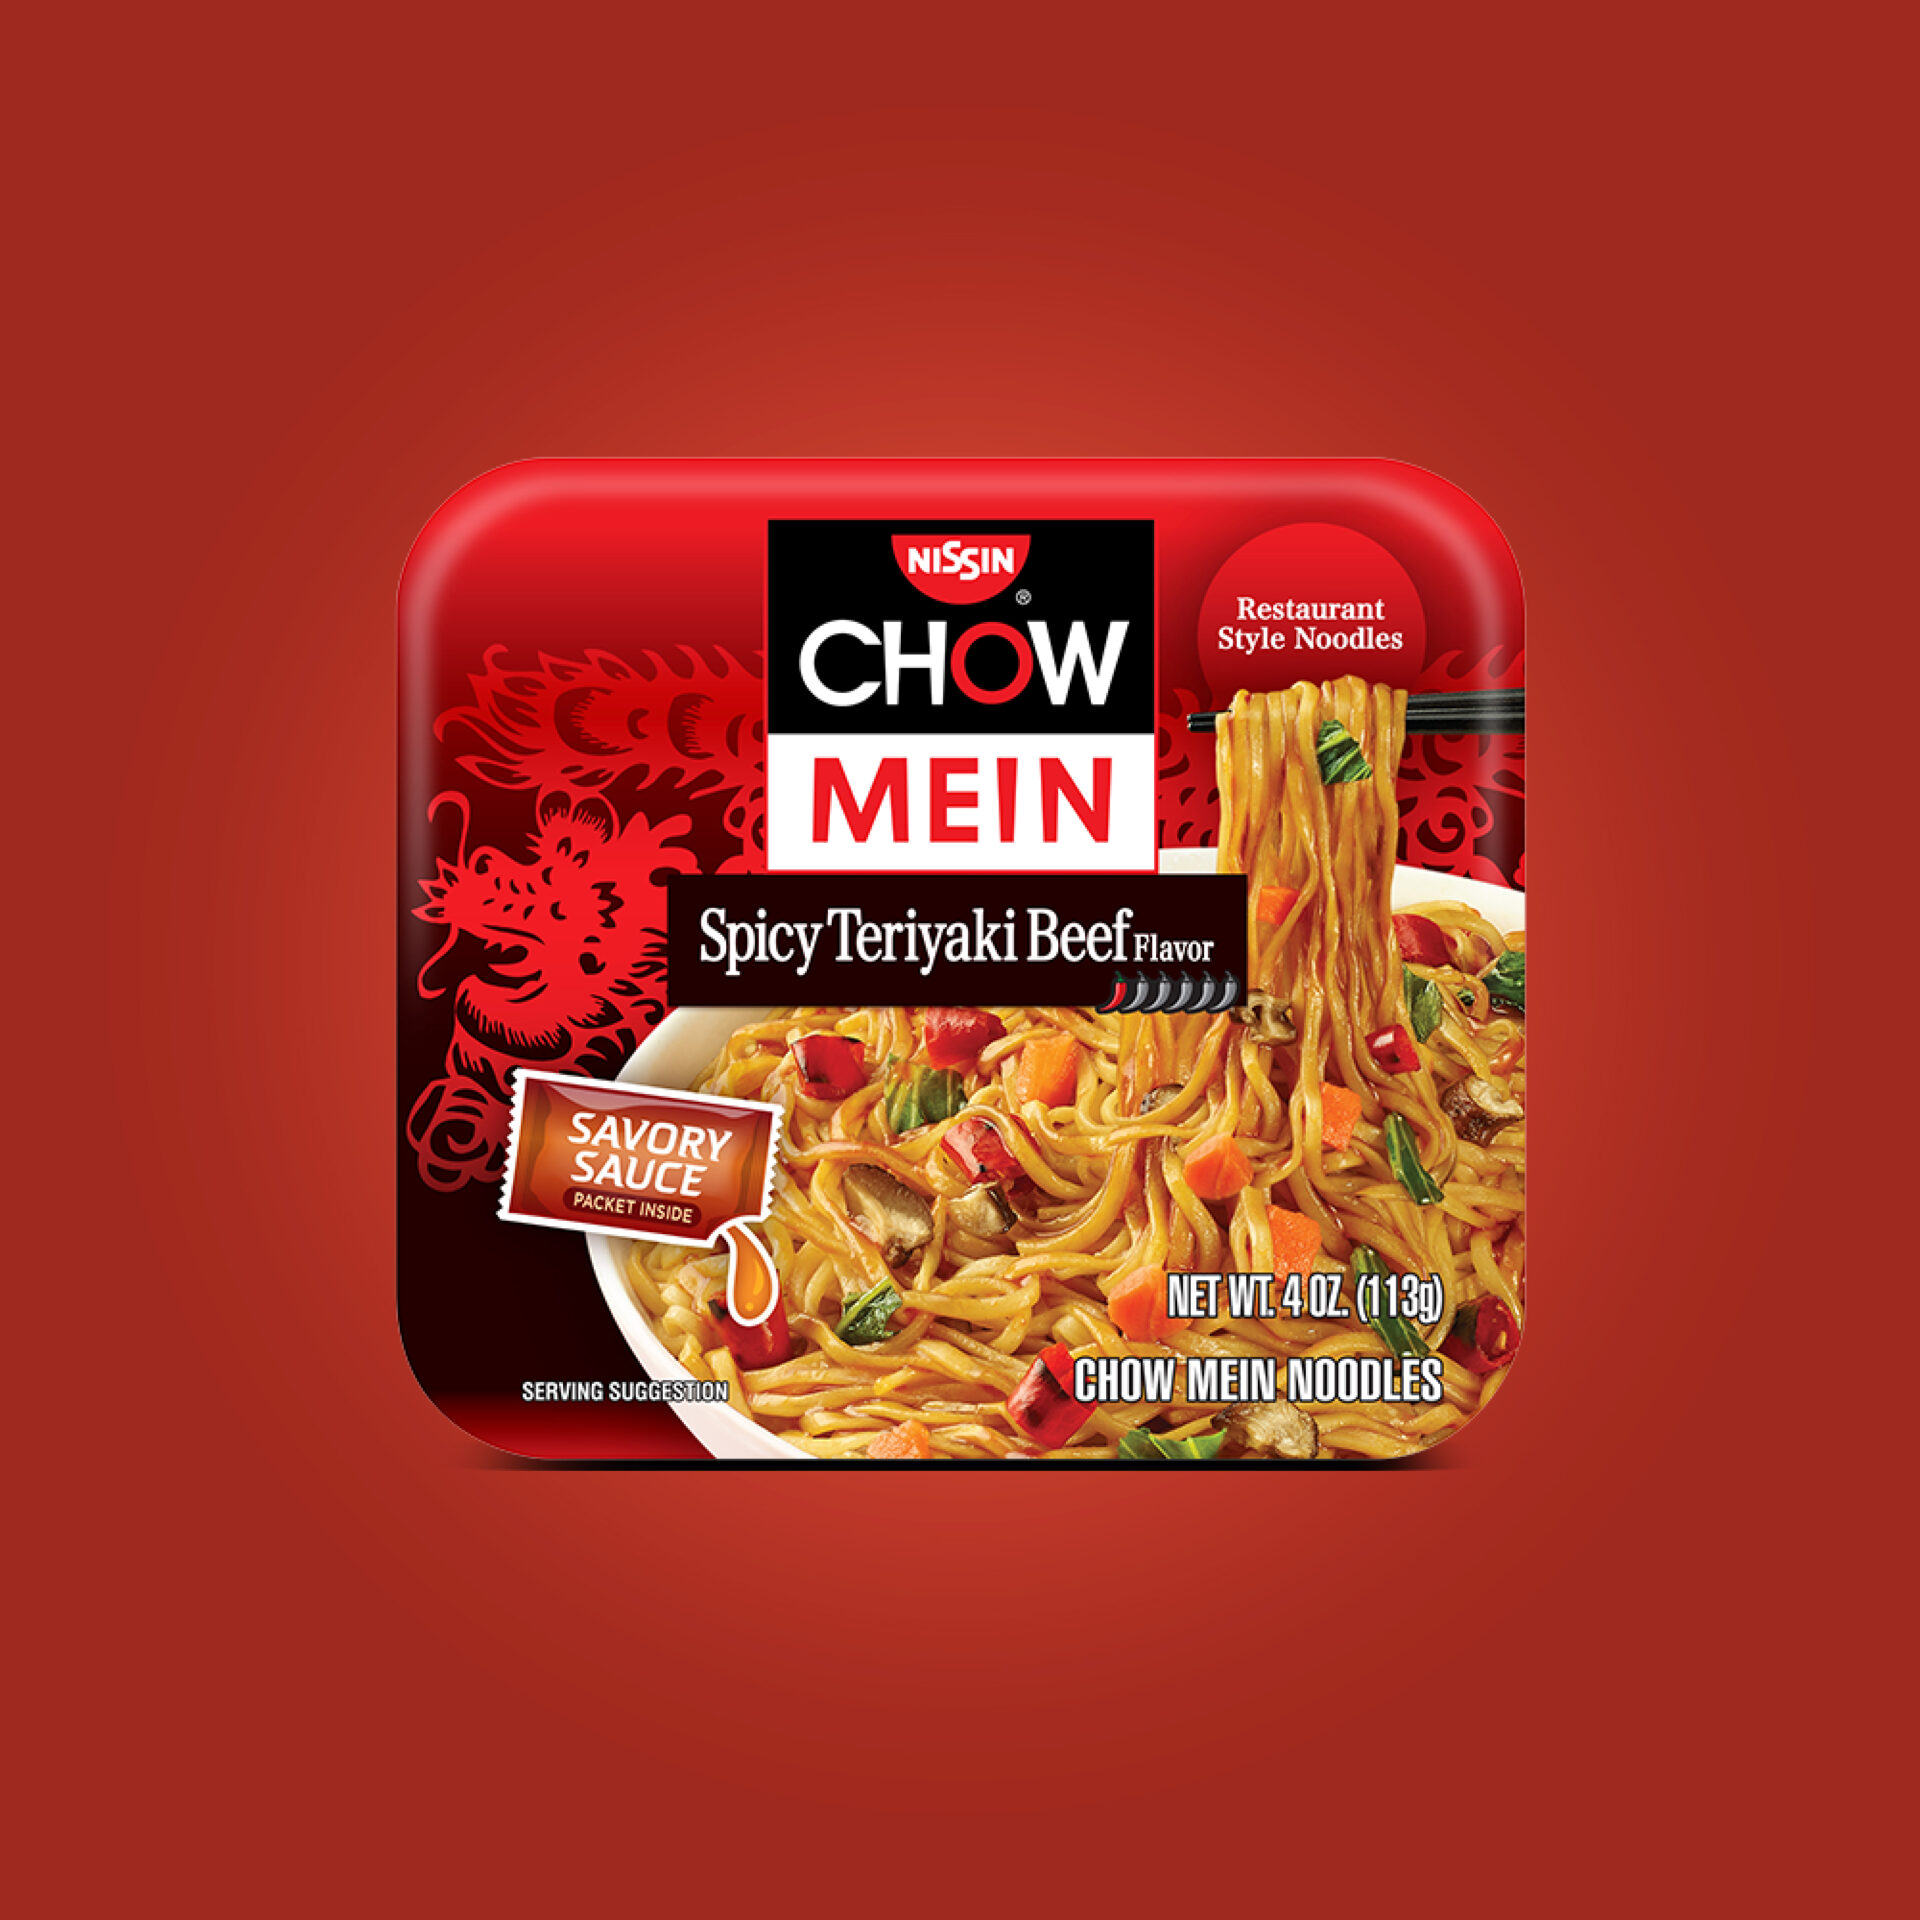 Chow Mein Spicy Teriyaki Beef - Nissin Food